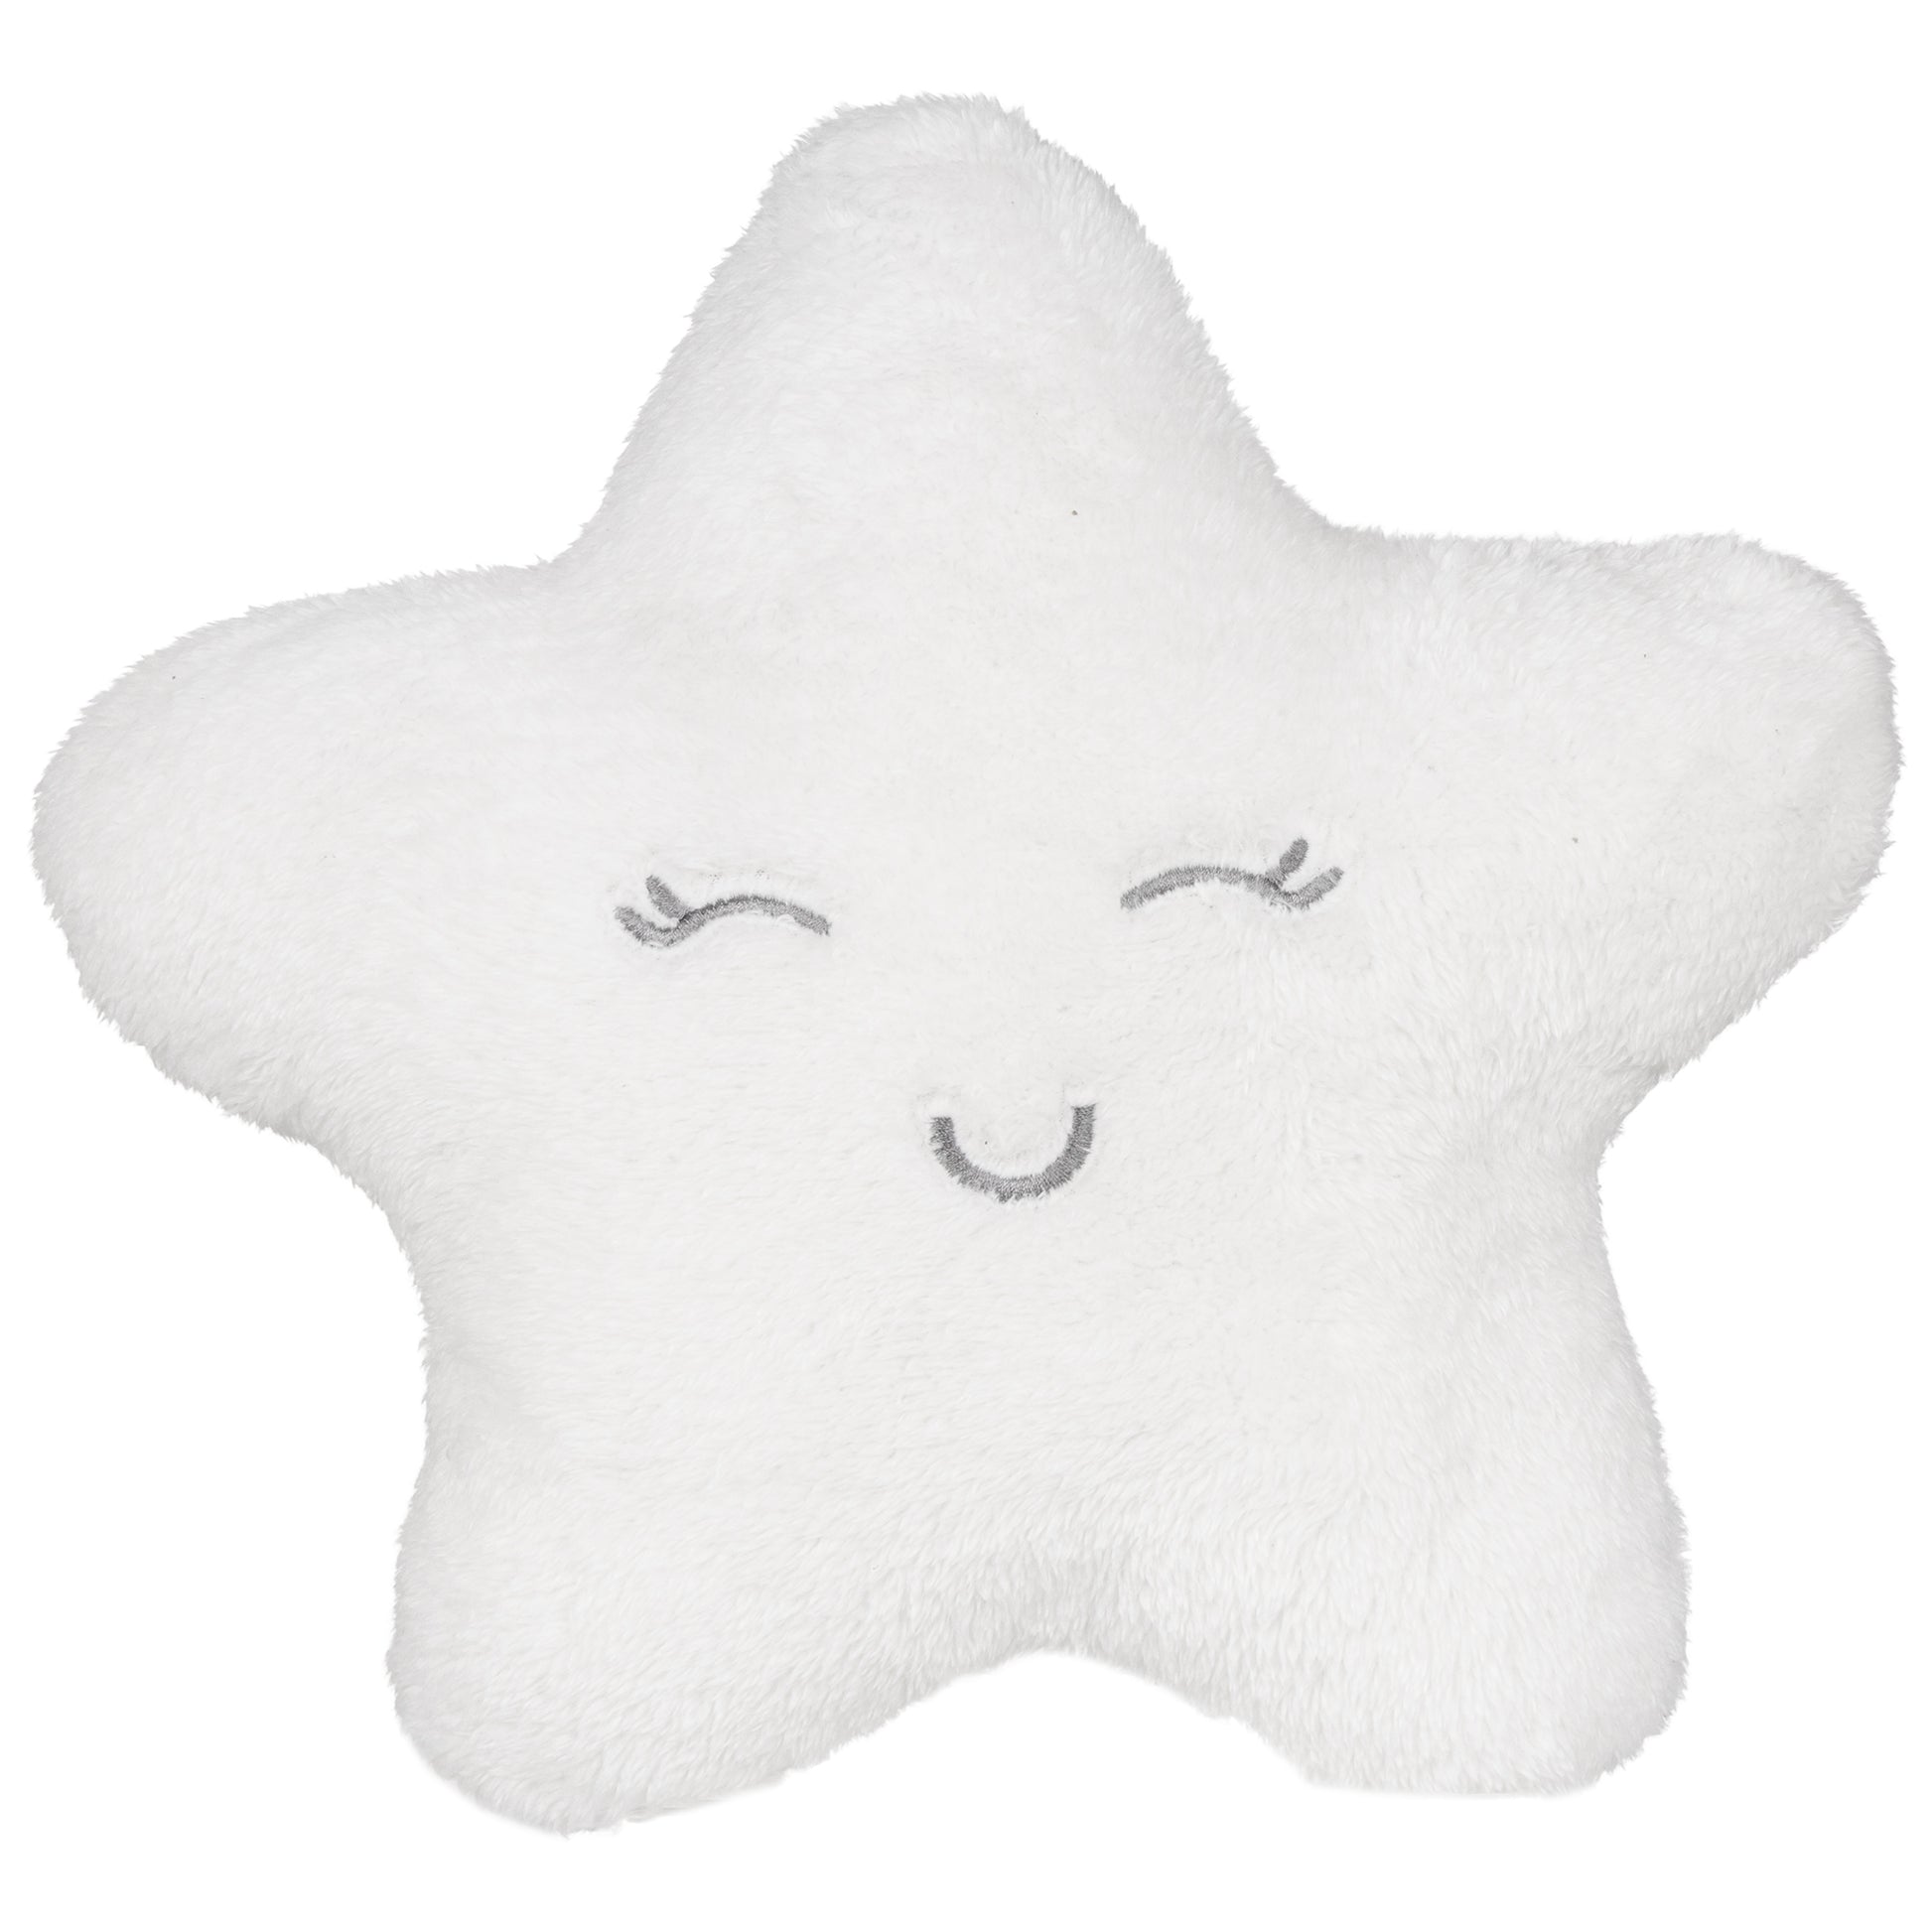  LaurelTree Aesthetic Cute Fuzzy Plush Star Shape